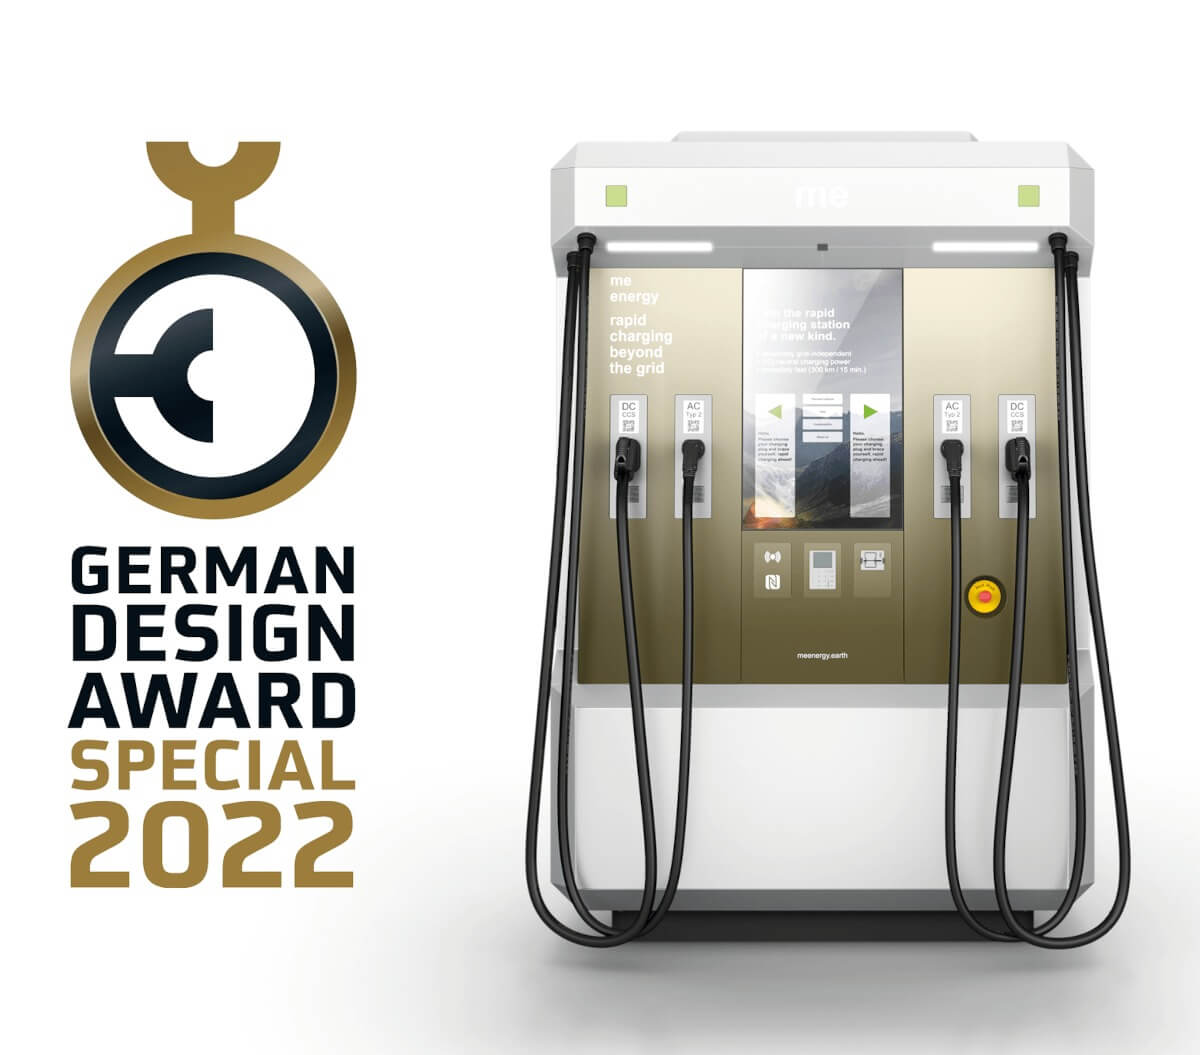 Rapid Charger 150 erhält den German Design Award 2022